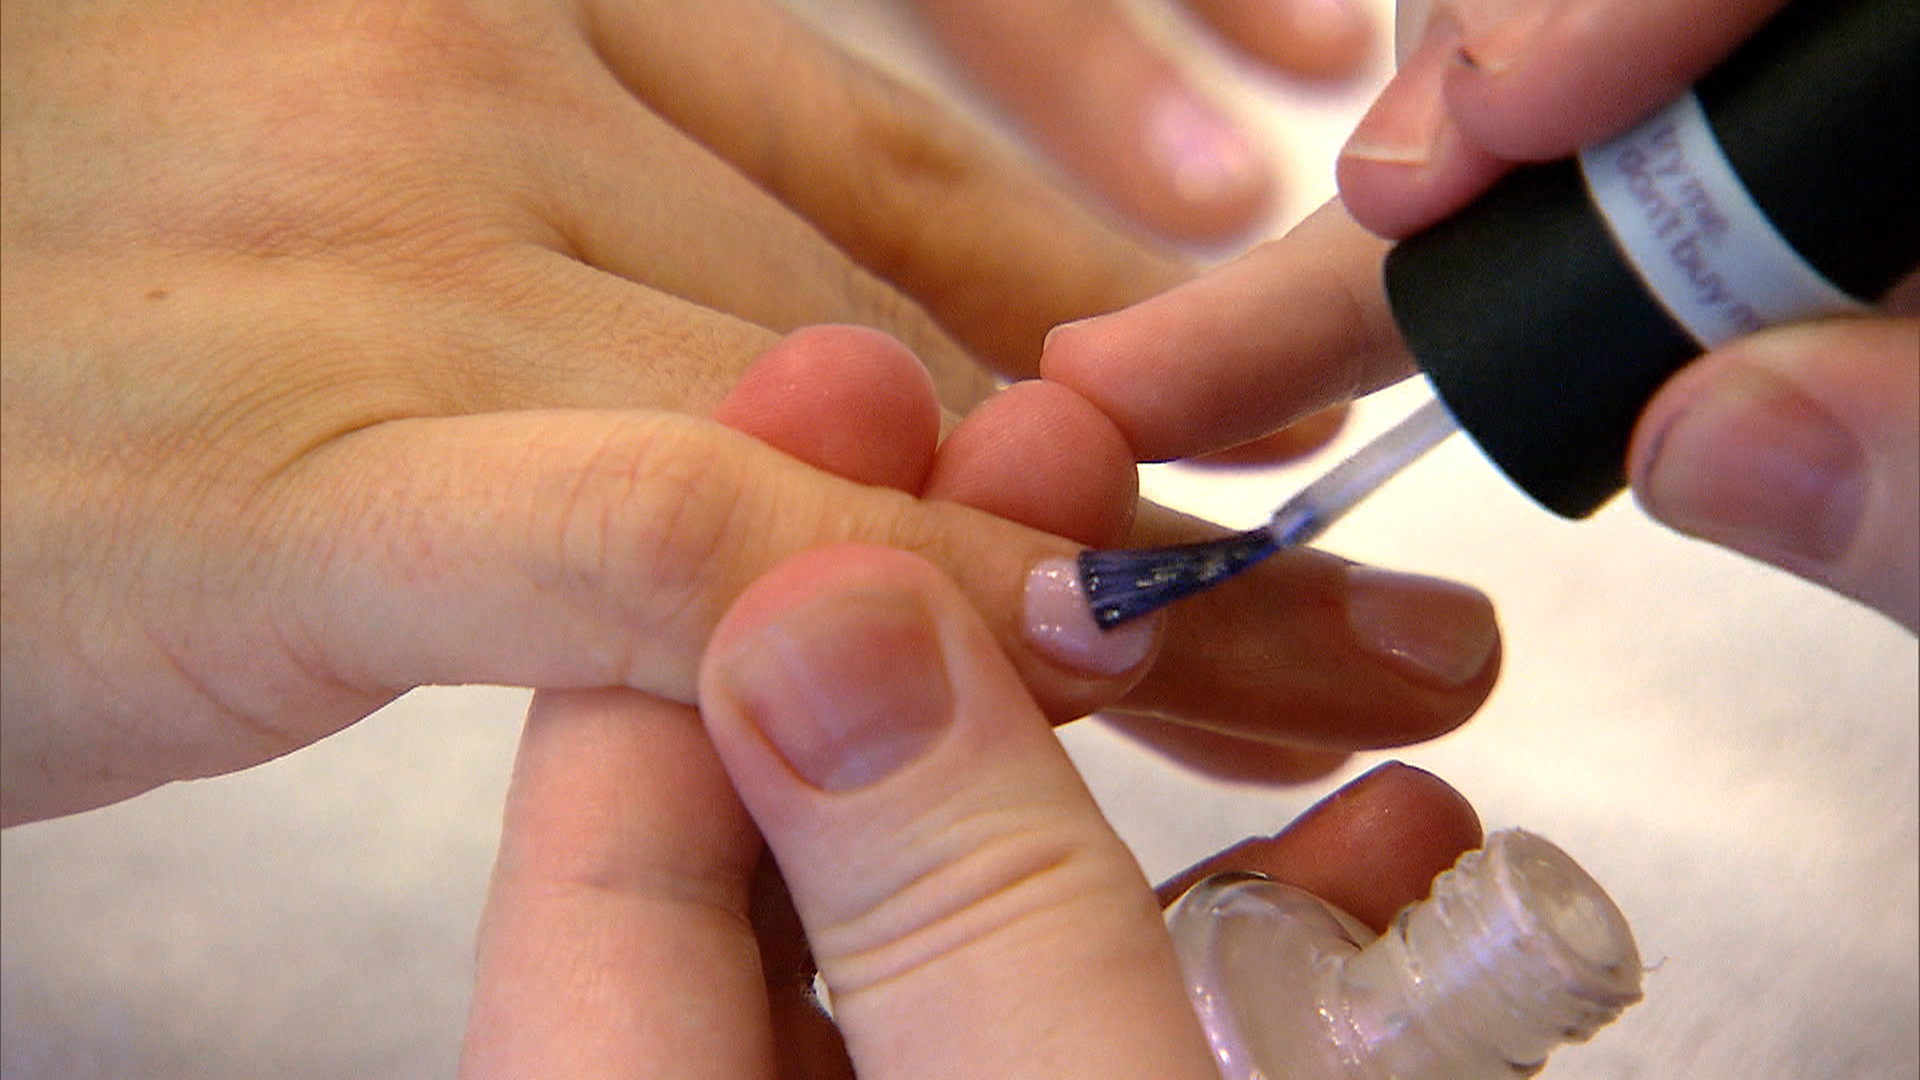 Nonprofit Receives EPA Grant to Make Nail Salons 'Healthy'